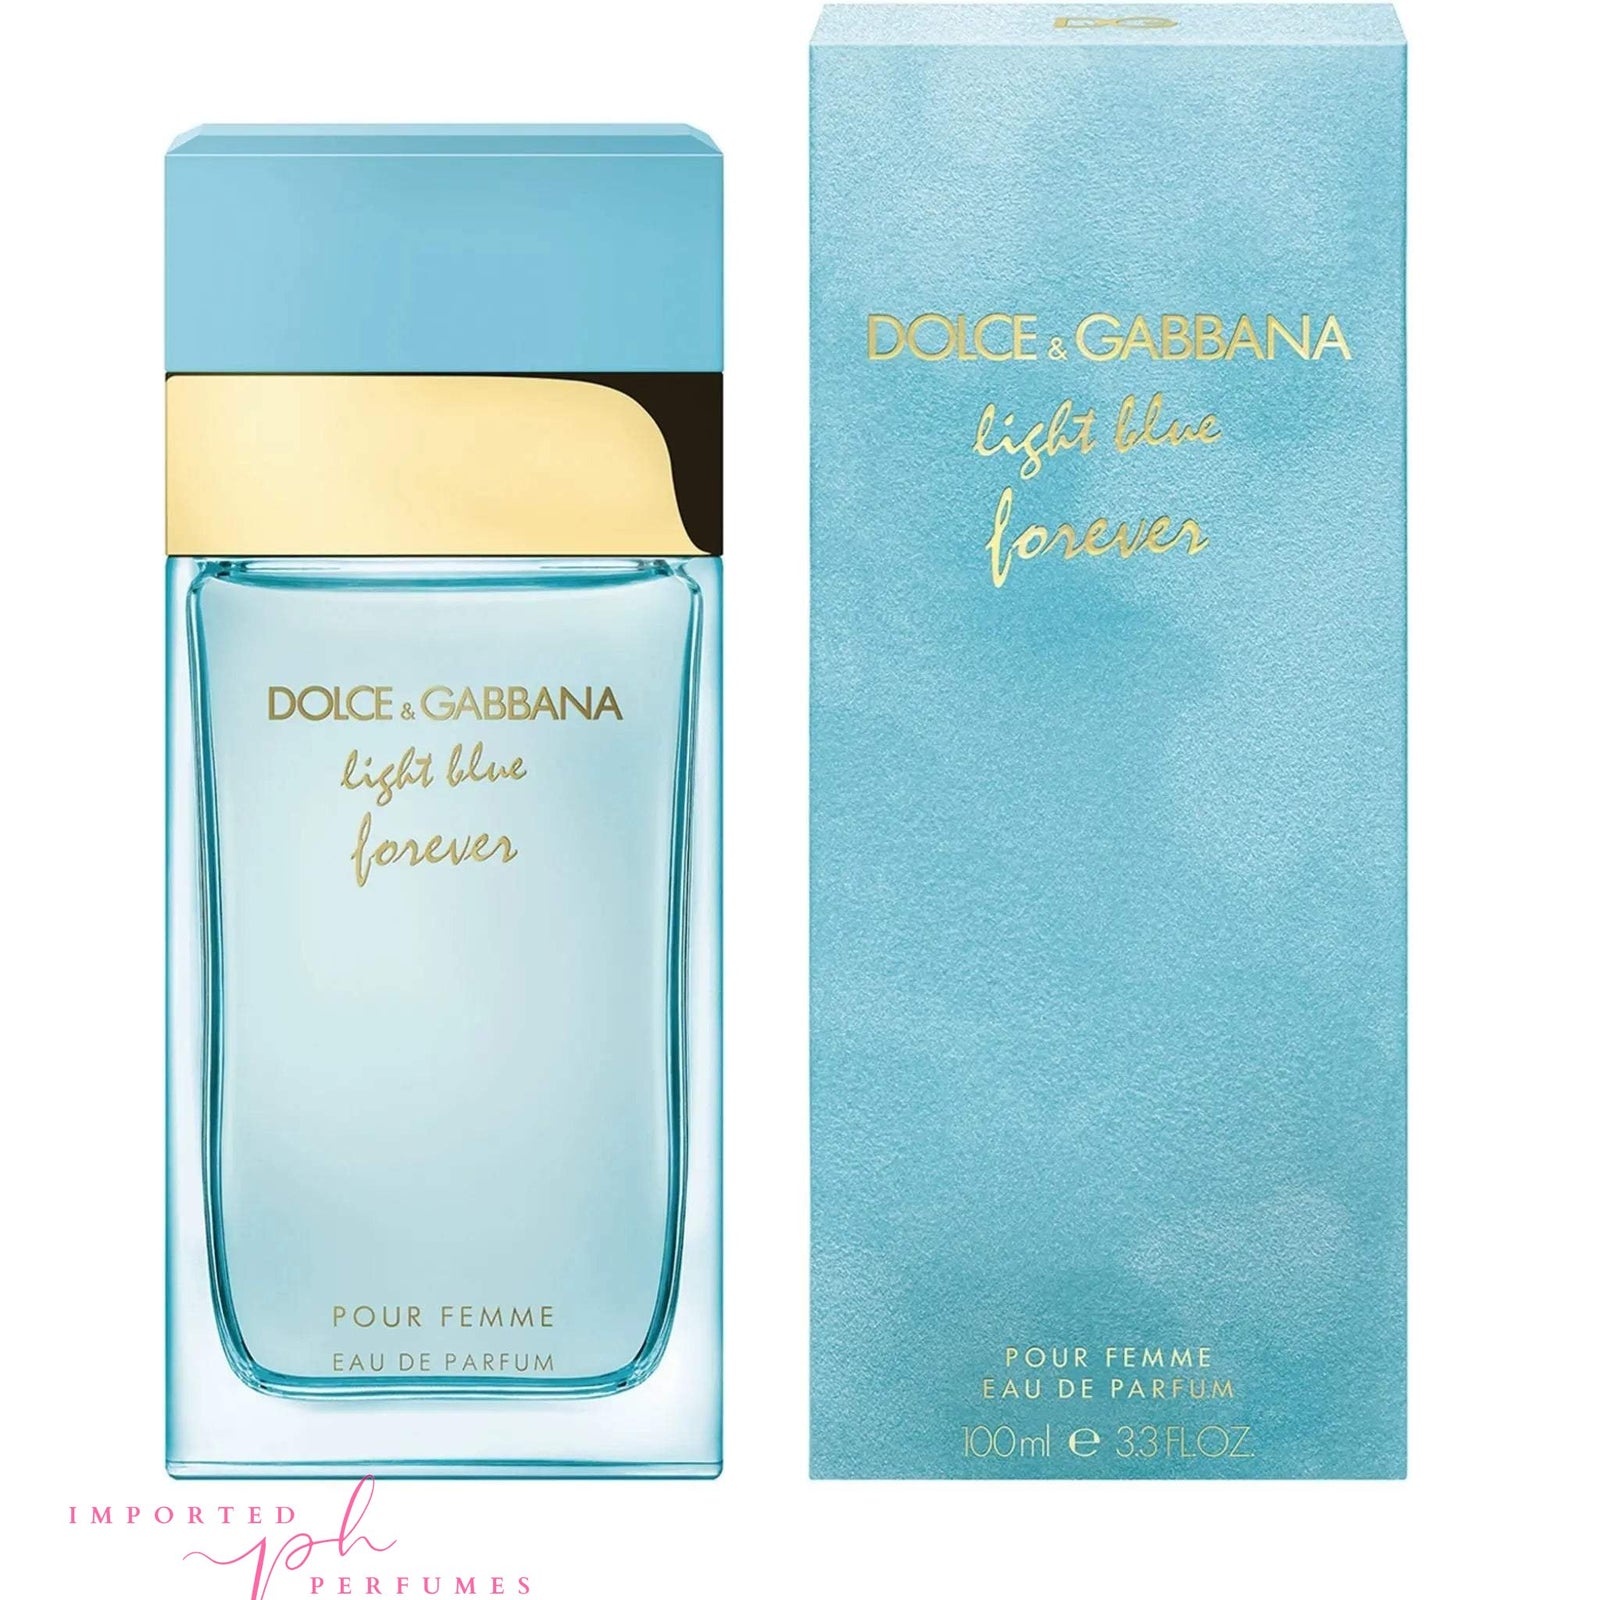 Dolce & Gabbana Light Blue Forever For Women EDP 100ml-Imported Perfumes Co-Dolce,Dolce & Gabbana,Dolce by dolce,Light blue forever,women